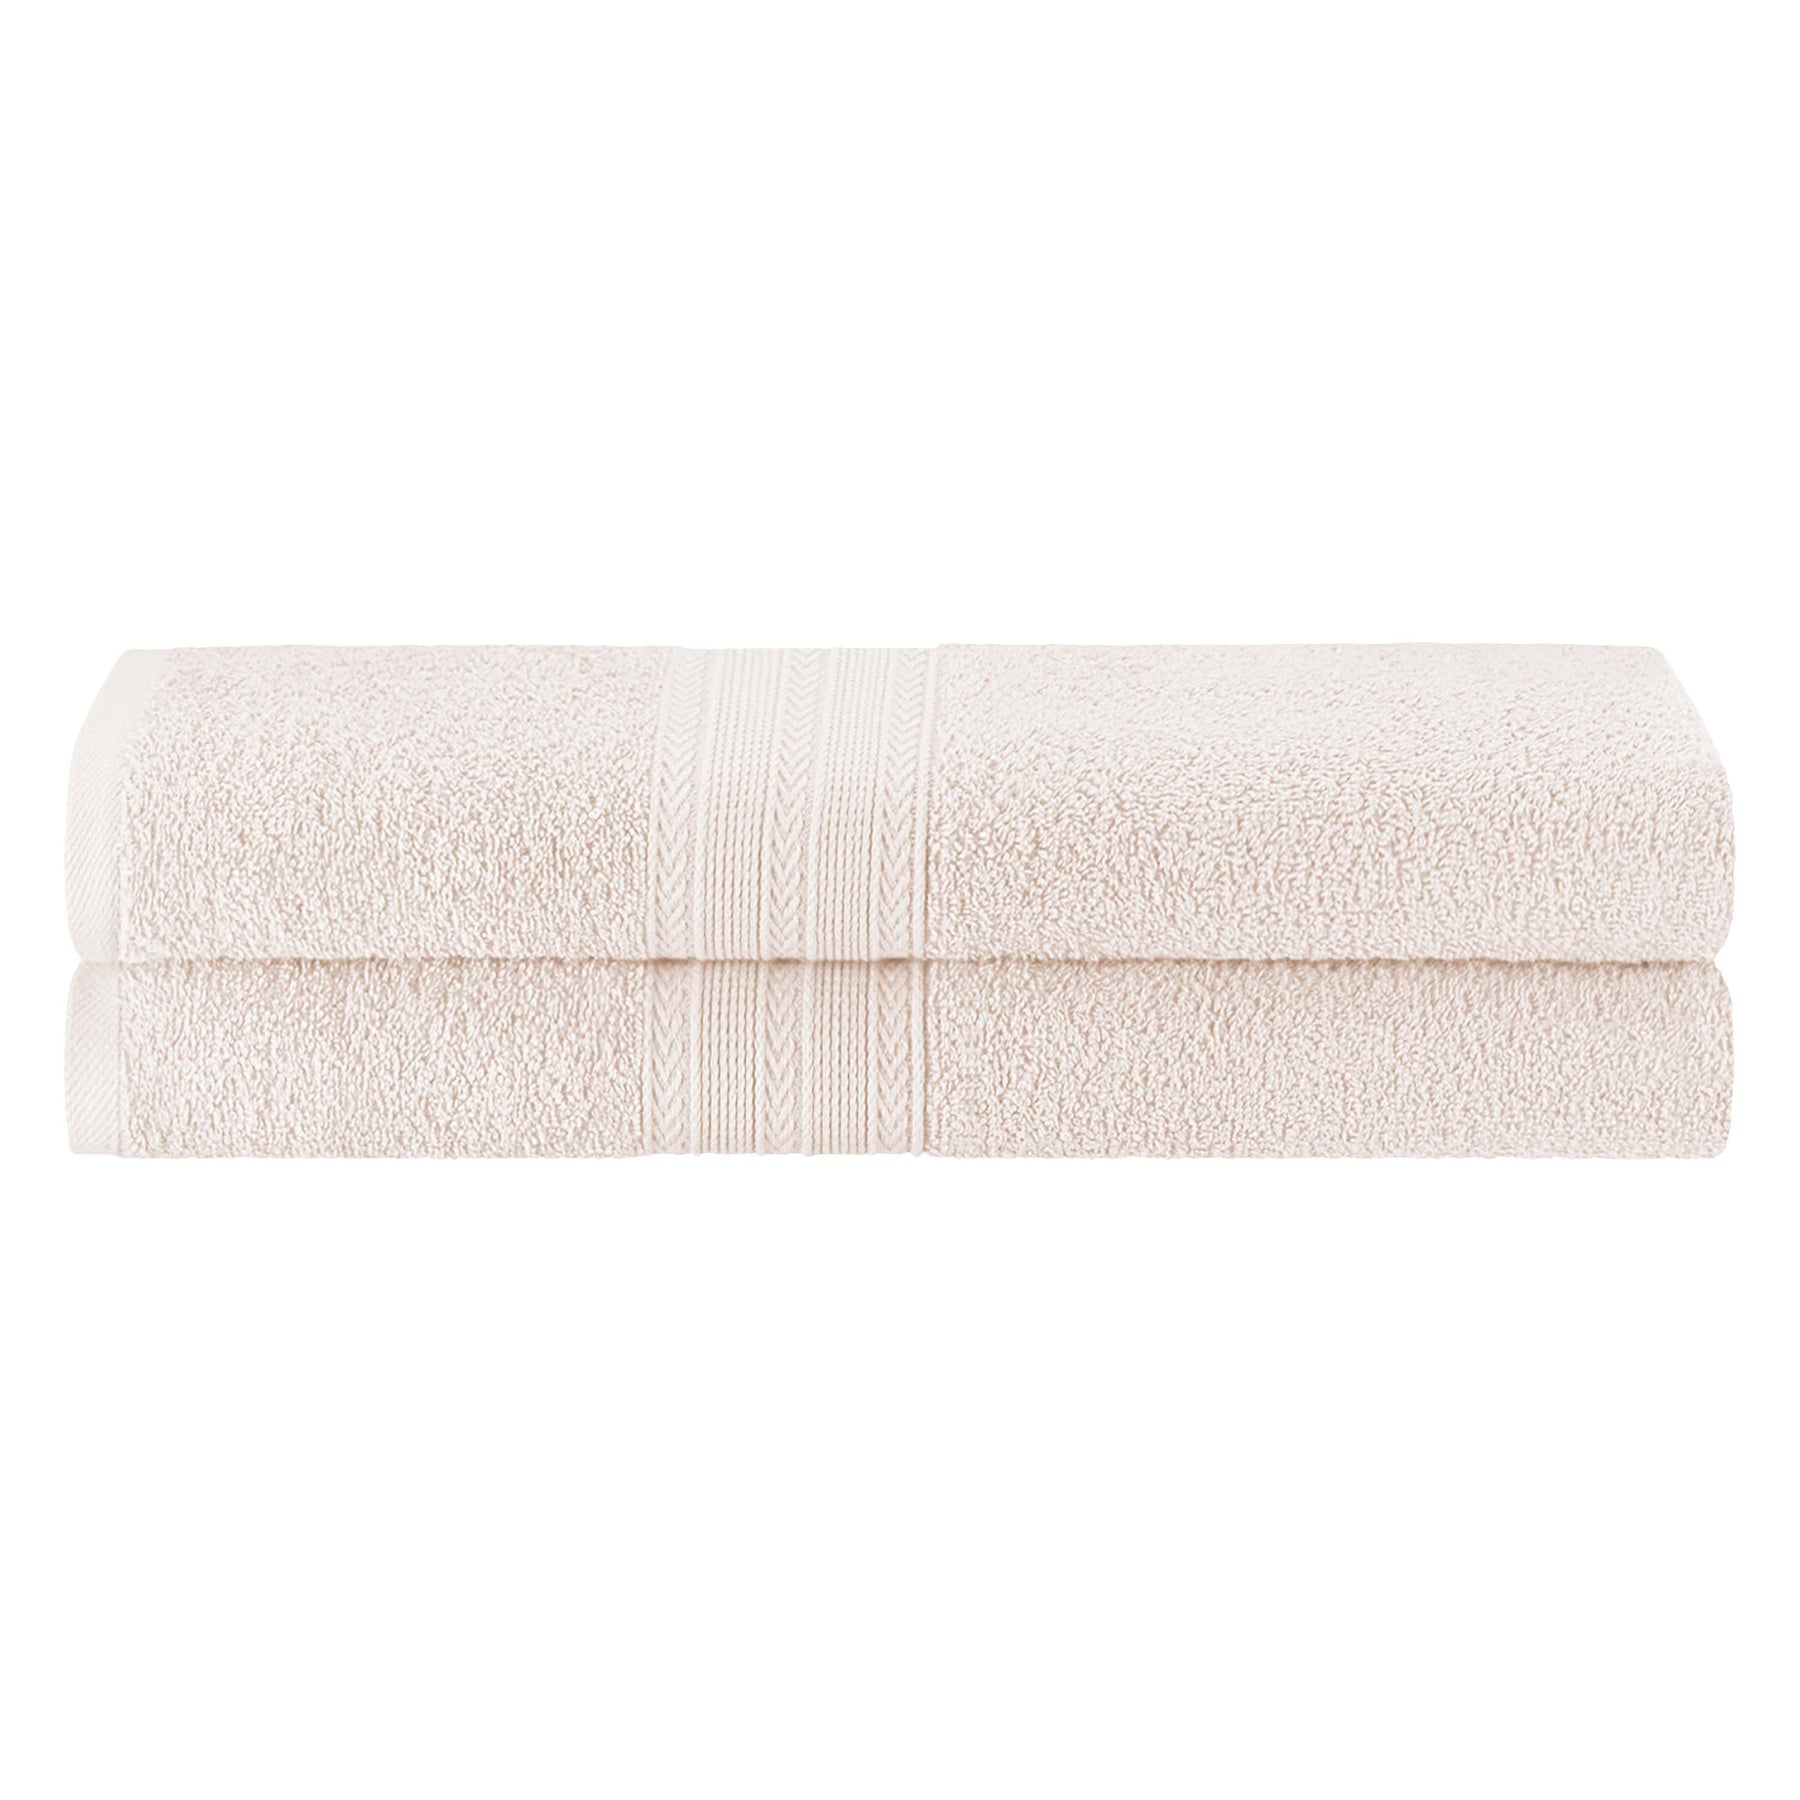 Eco-Friendly Ring Spun Cotton Towel Set - Ivory